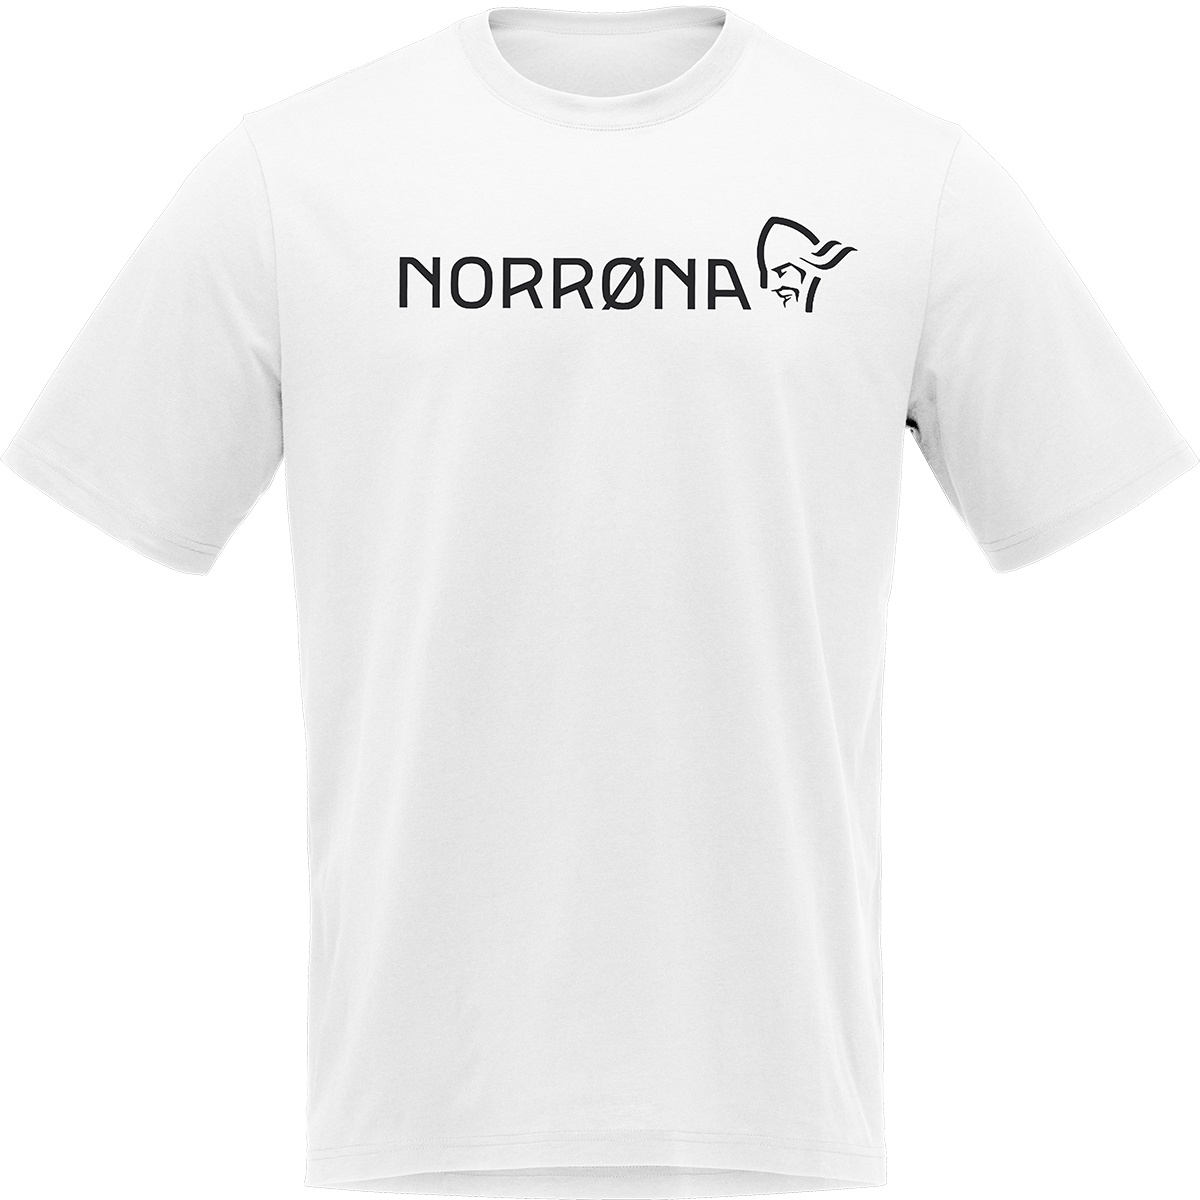 Norrona Herren Cotton Norrøna Viking T-Shirt von Norrona